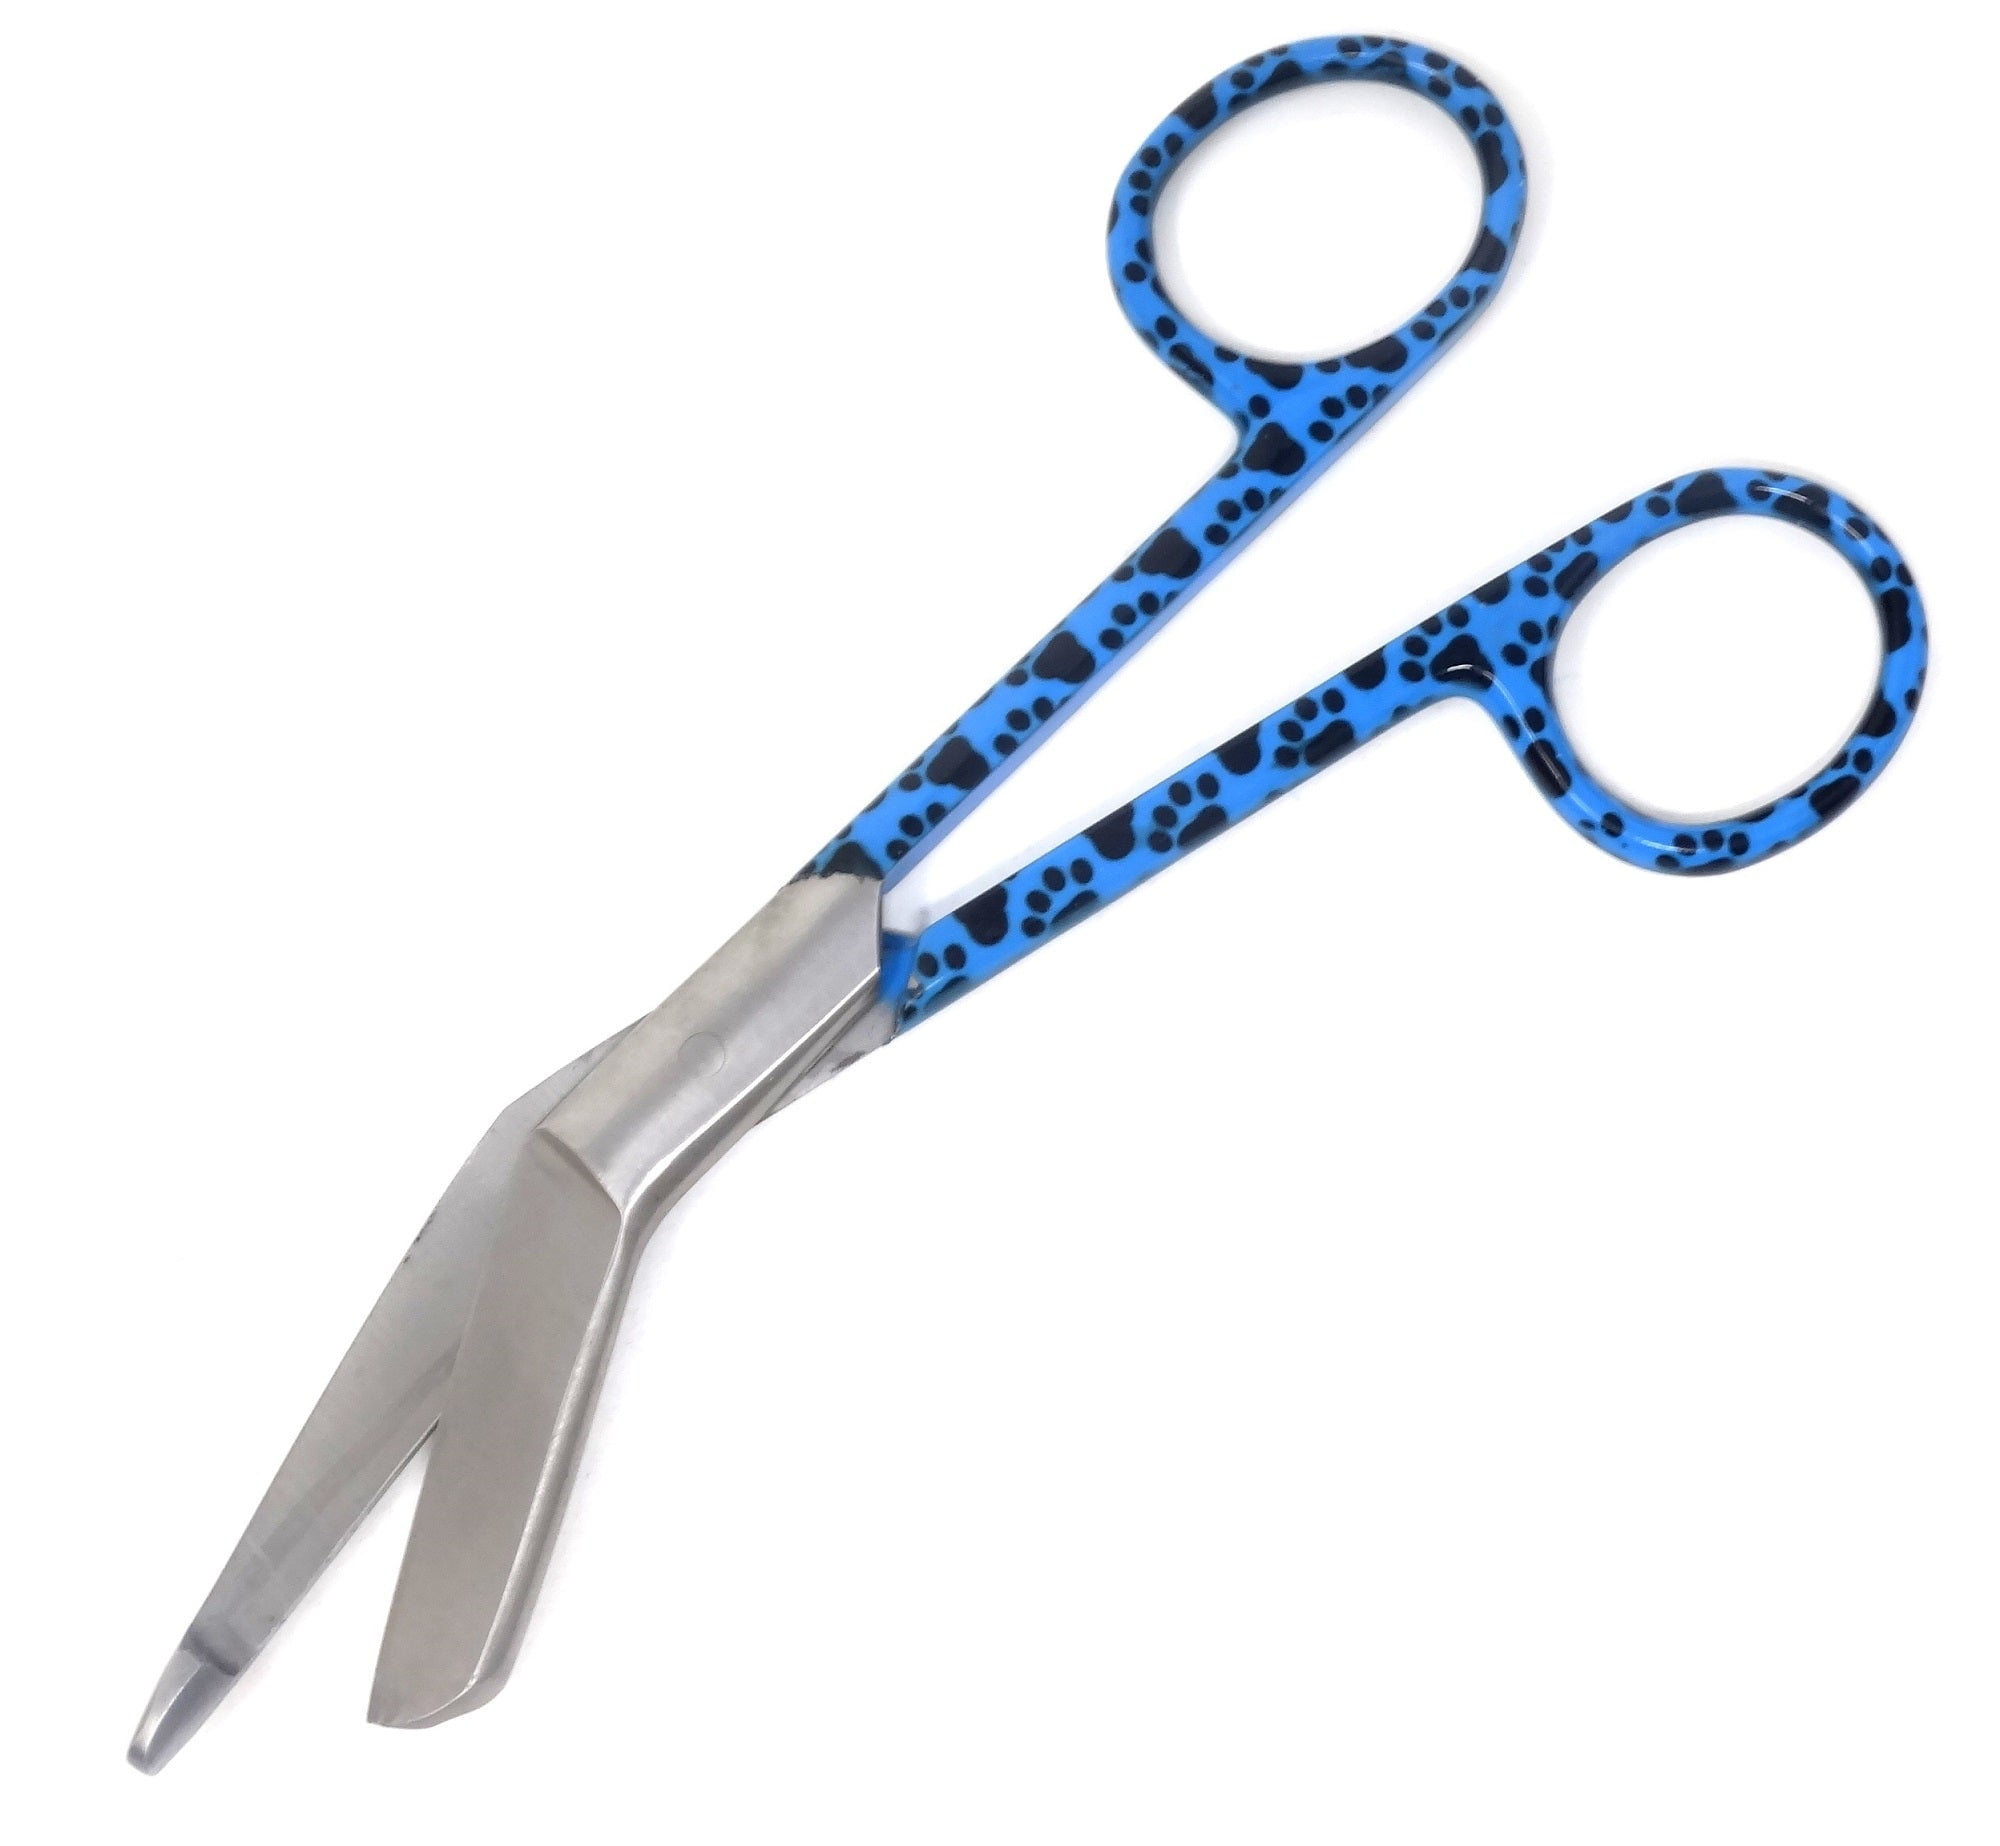 AAProTools Lister Bandage Scissors, Stainless Steel, Adult - Bulk Multipack  - Select Quantity (Black, 3.5-10 Pack)